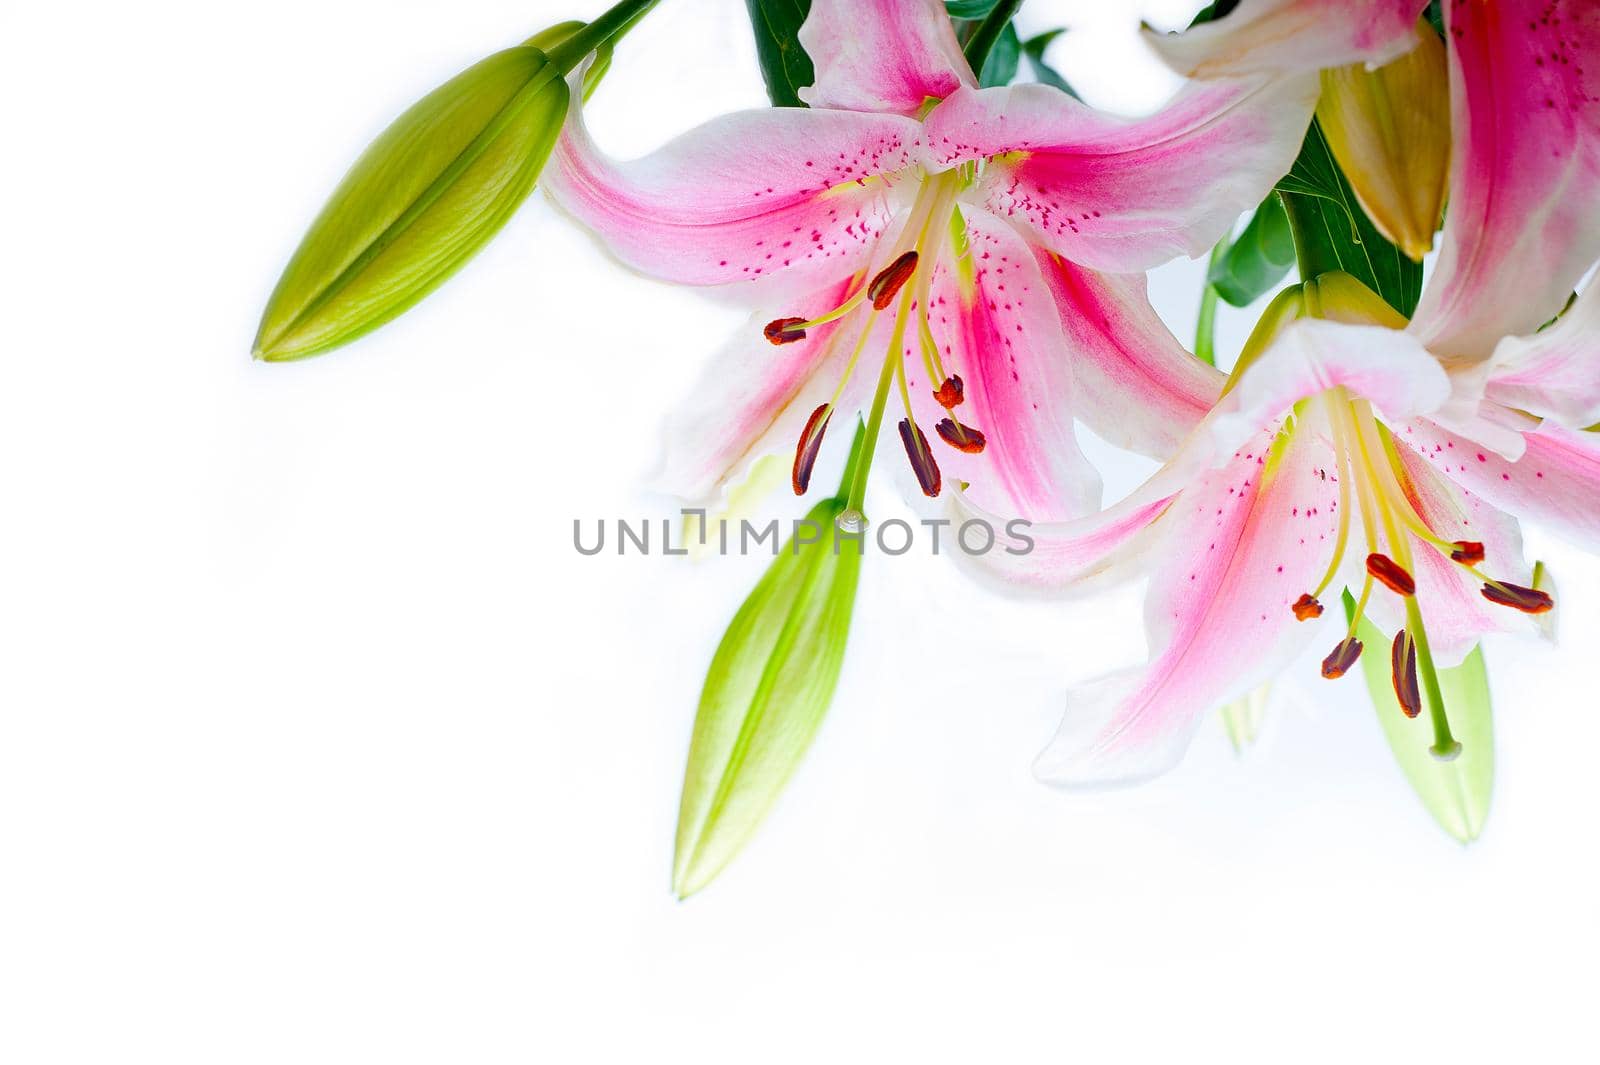 lily flowers corner frame by keko64